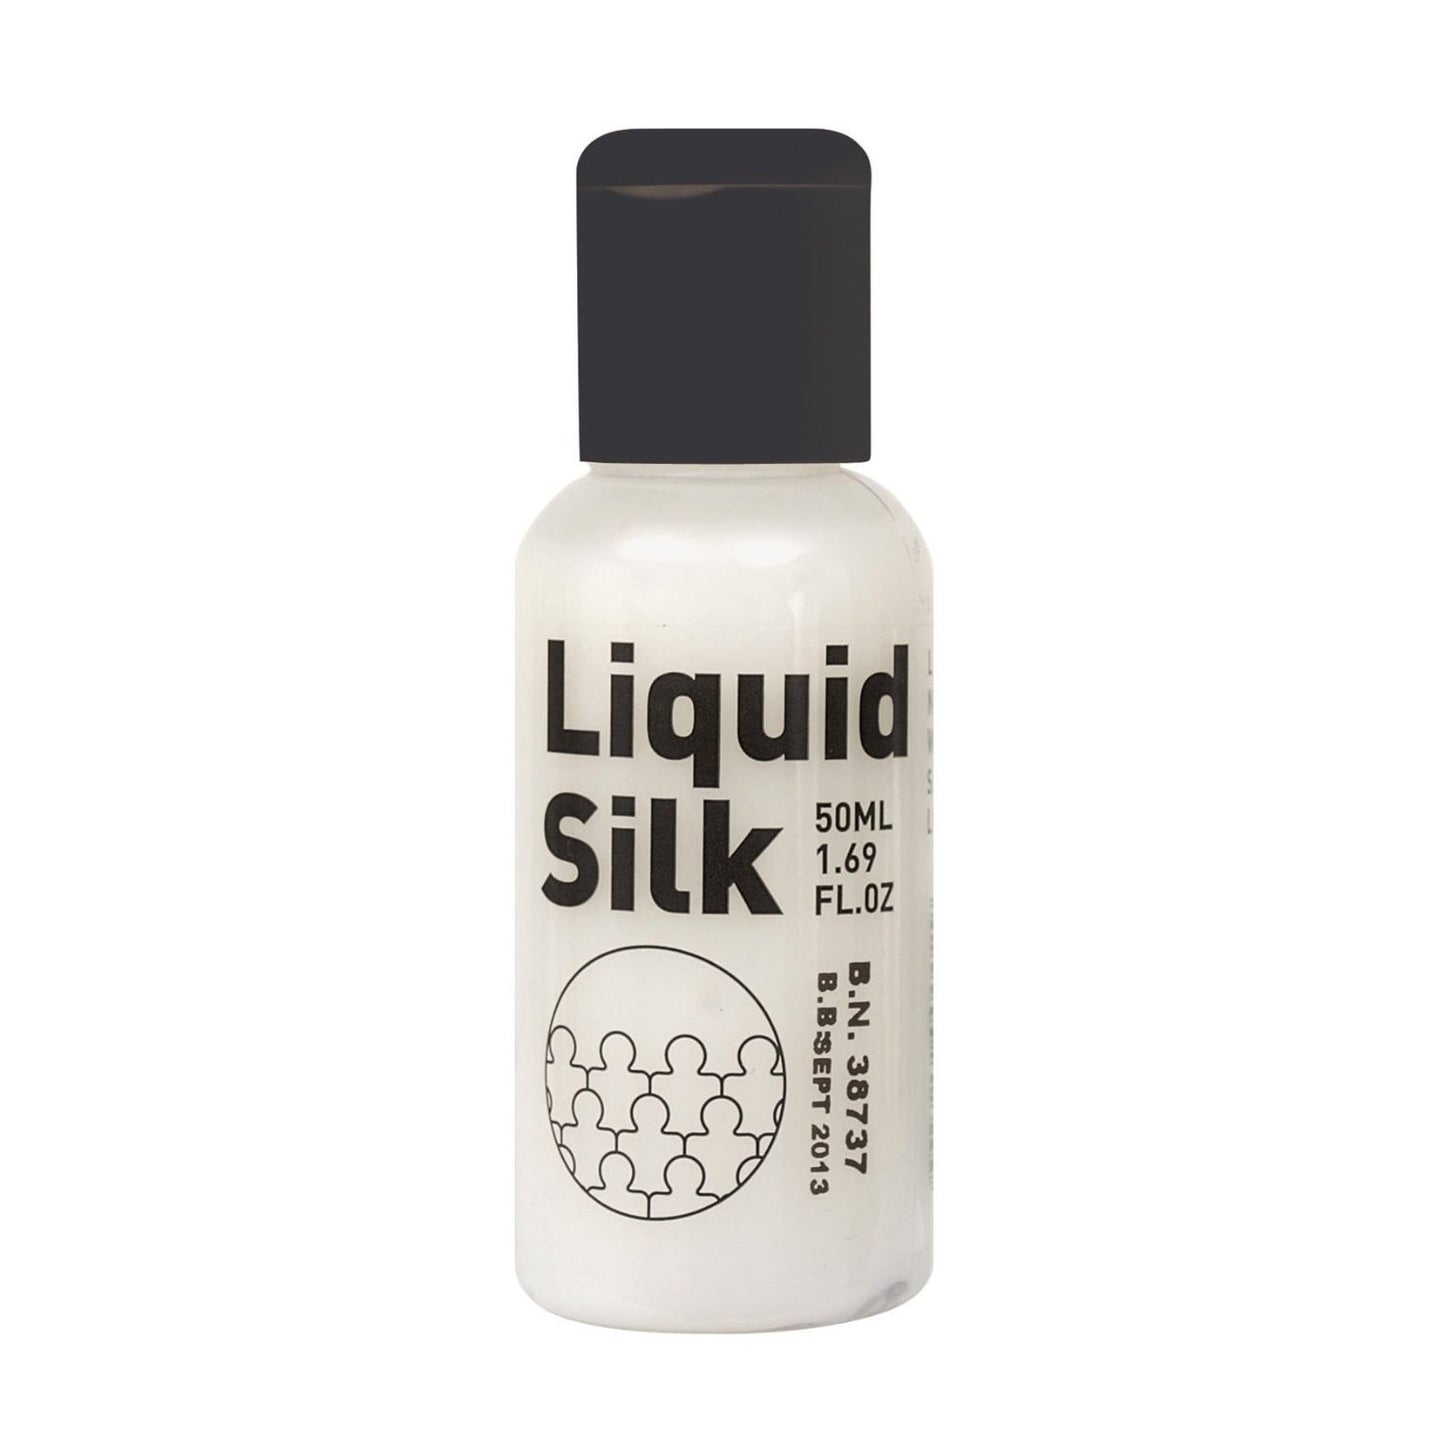 Liquid Silk 50ML